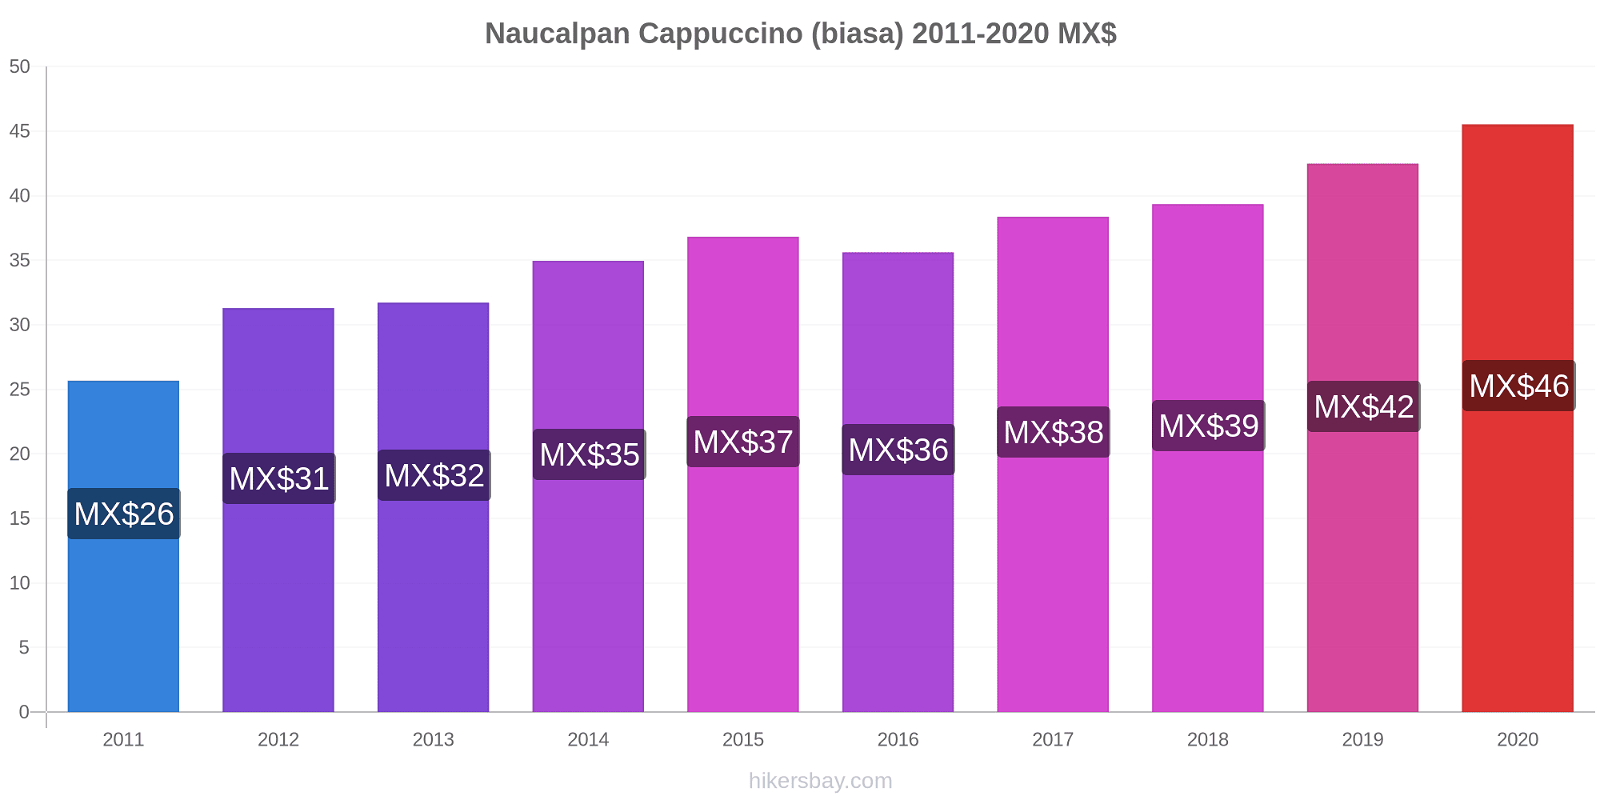 Naucalpan perubahan harga Cappuccino (biasa) hikersbay.com